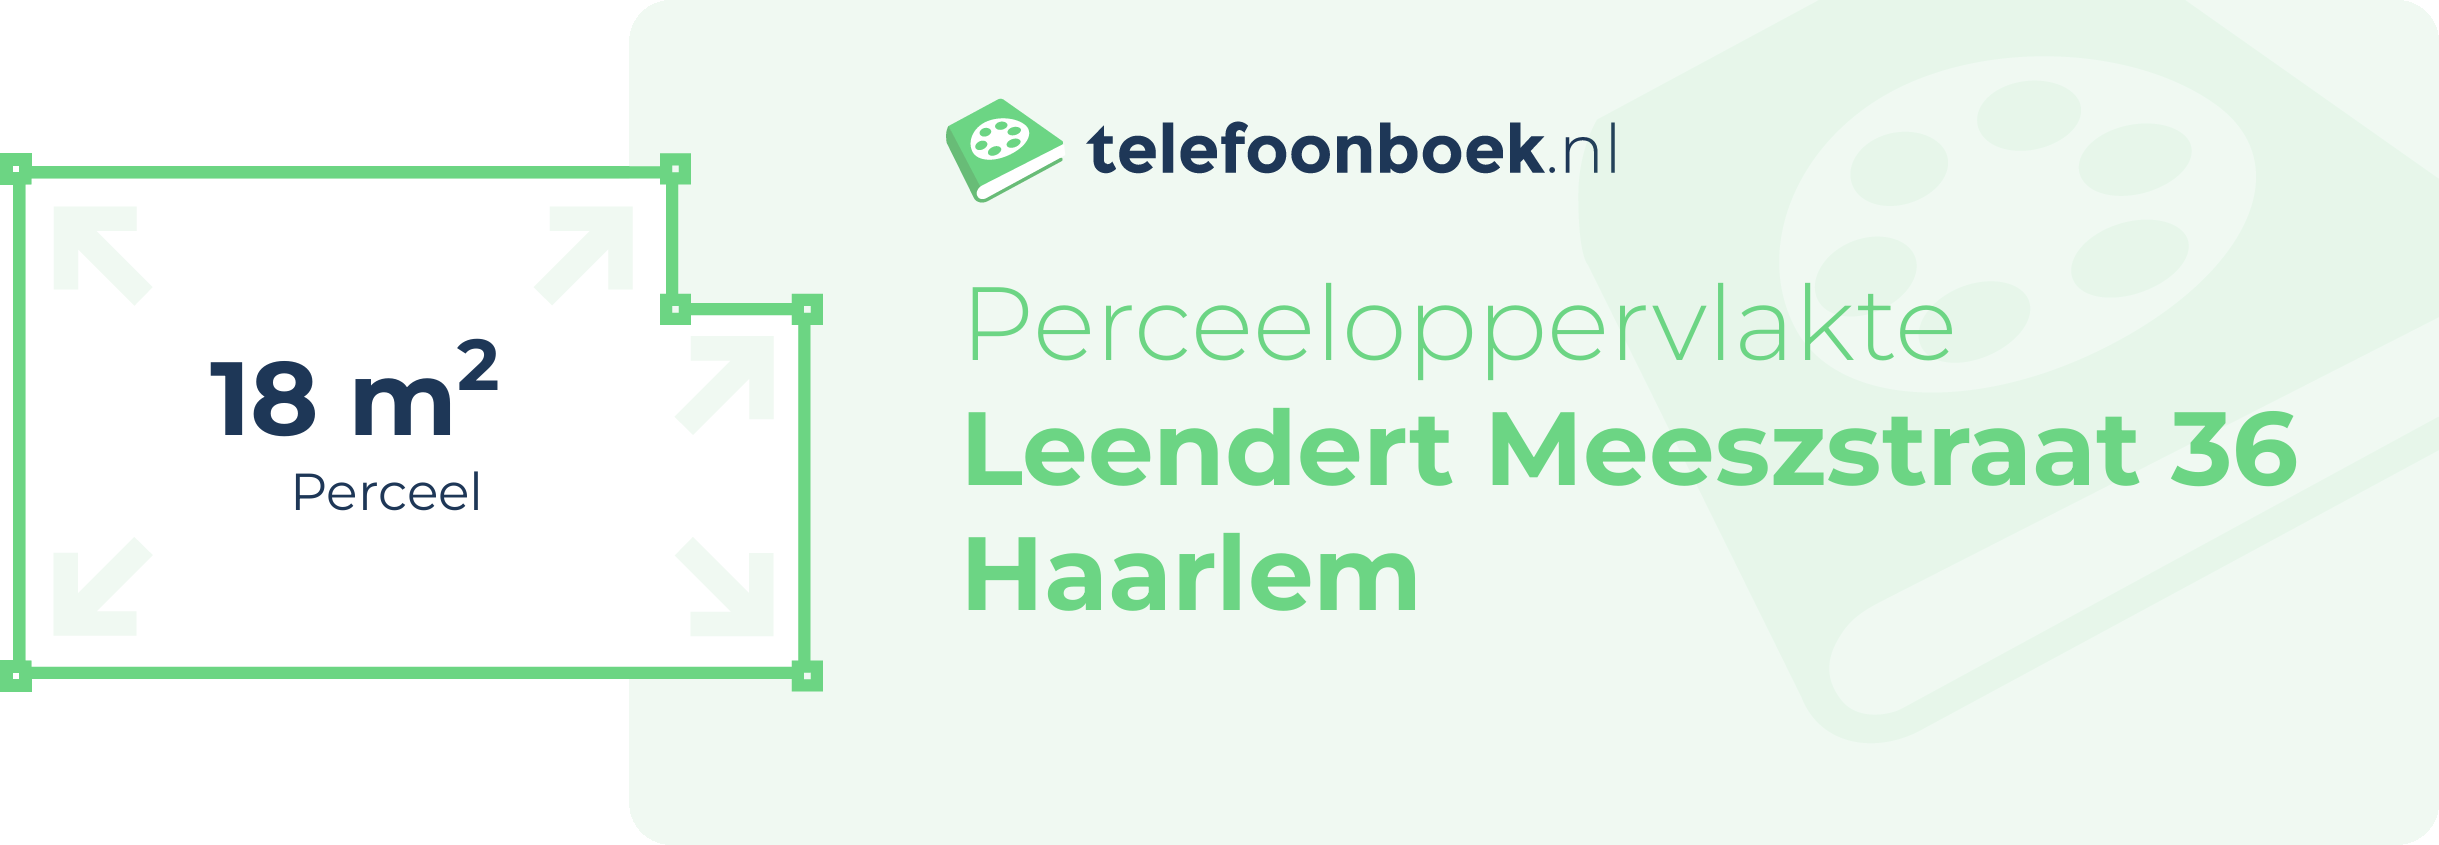 Perceeloppervlakte Leendert Meeszstraat 36 Haarlem